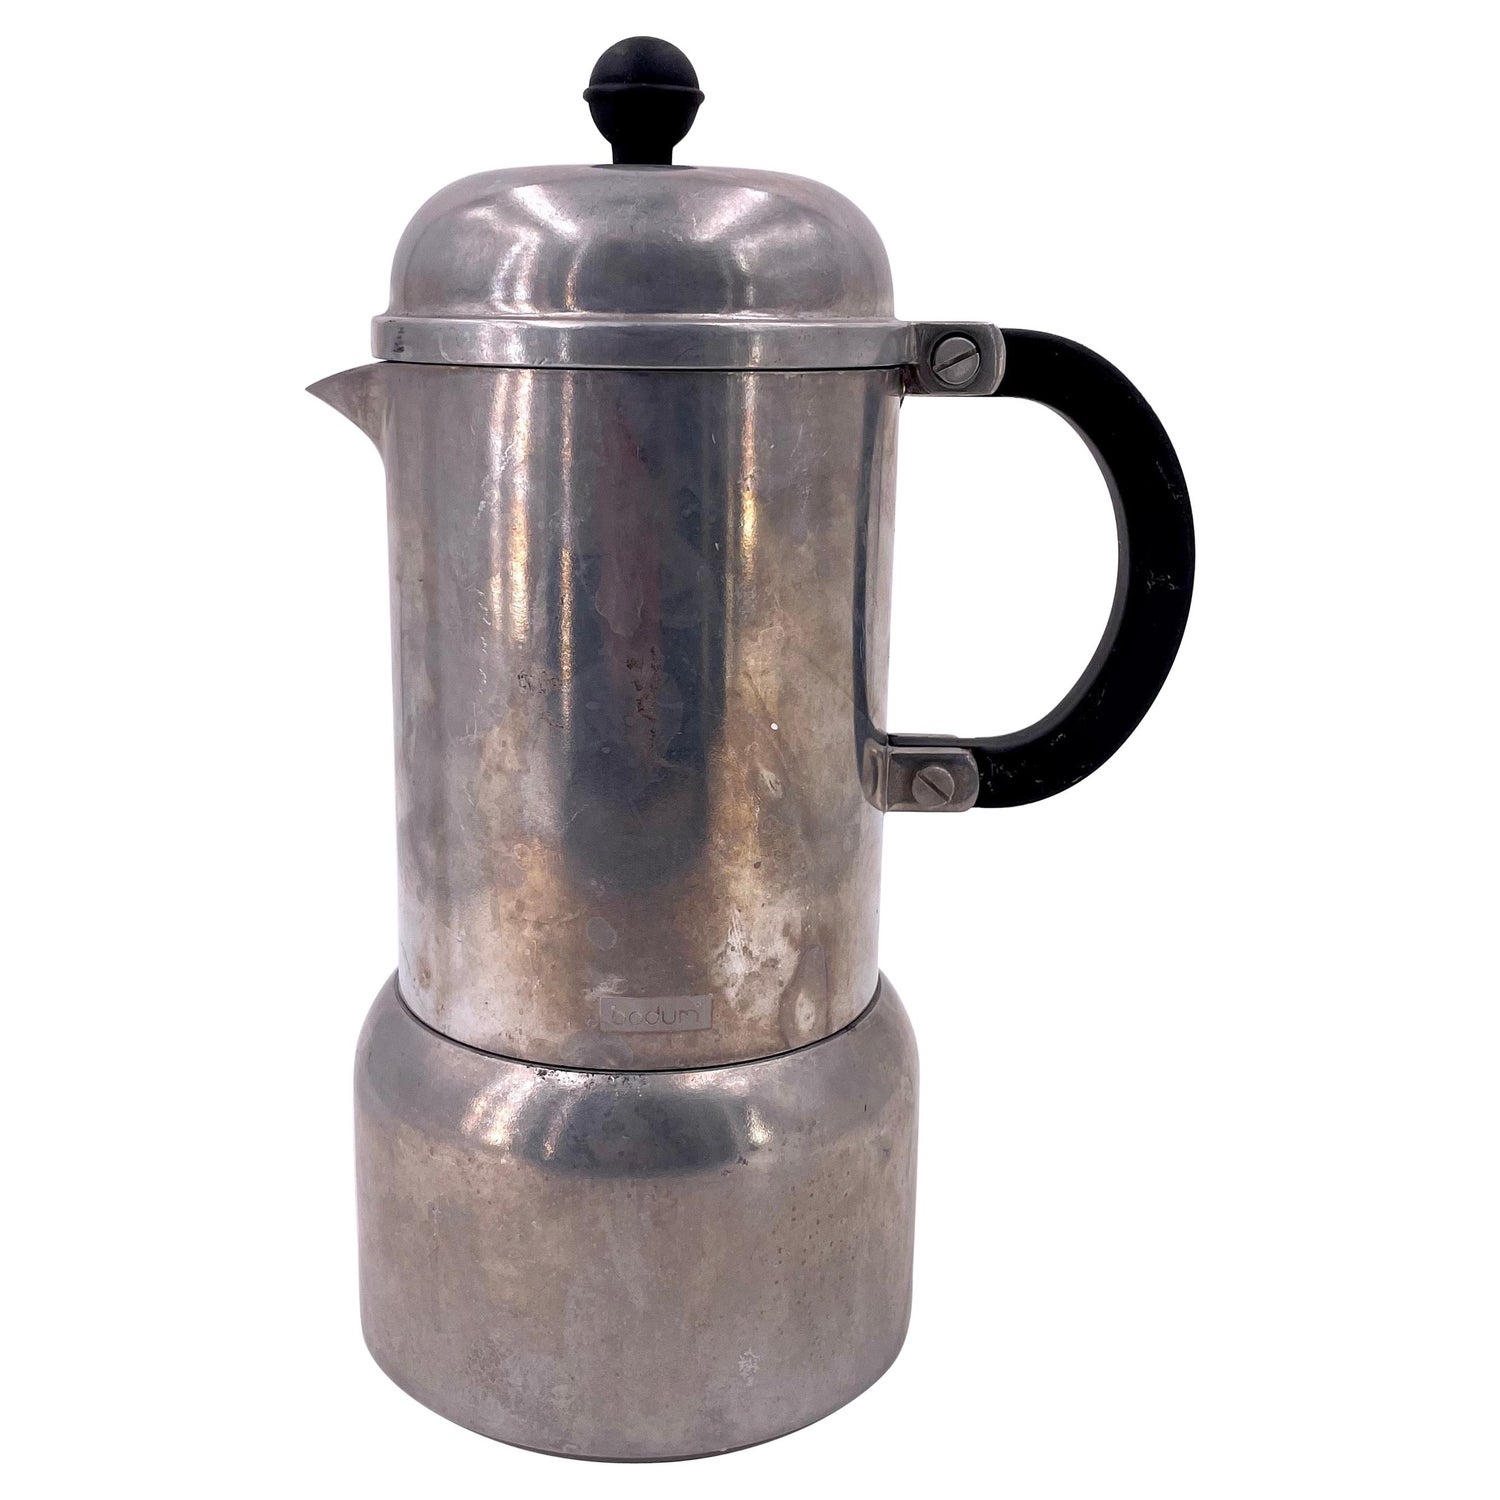 https://a.1stdibscdn.com/large-espresso-coffee-maker-postmodern-design-by-bodum-6-cup-for-sale/1121189/f_244216721625652450995/24421672_master.jpg?width=1500